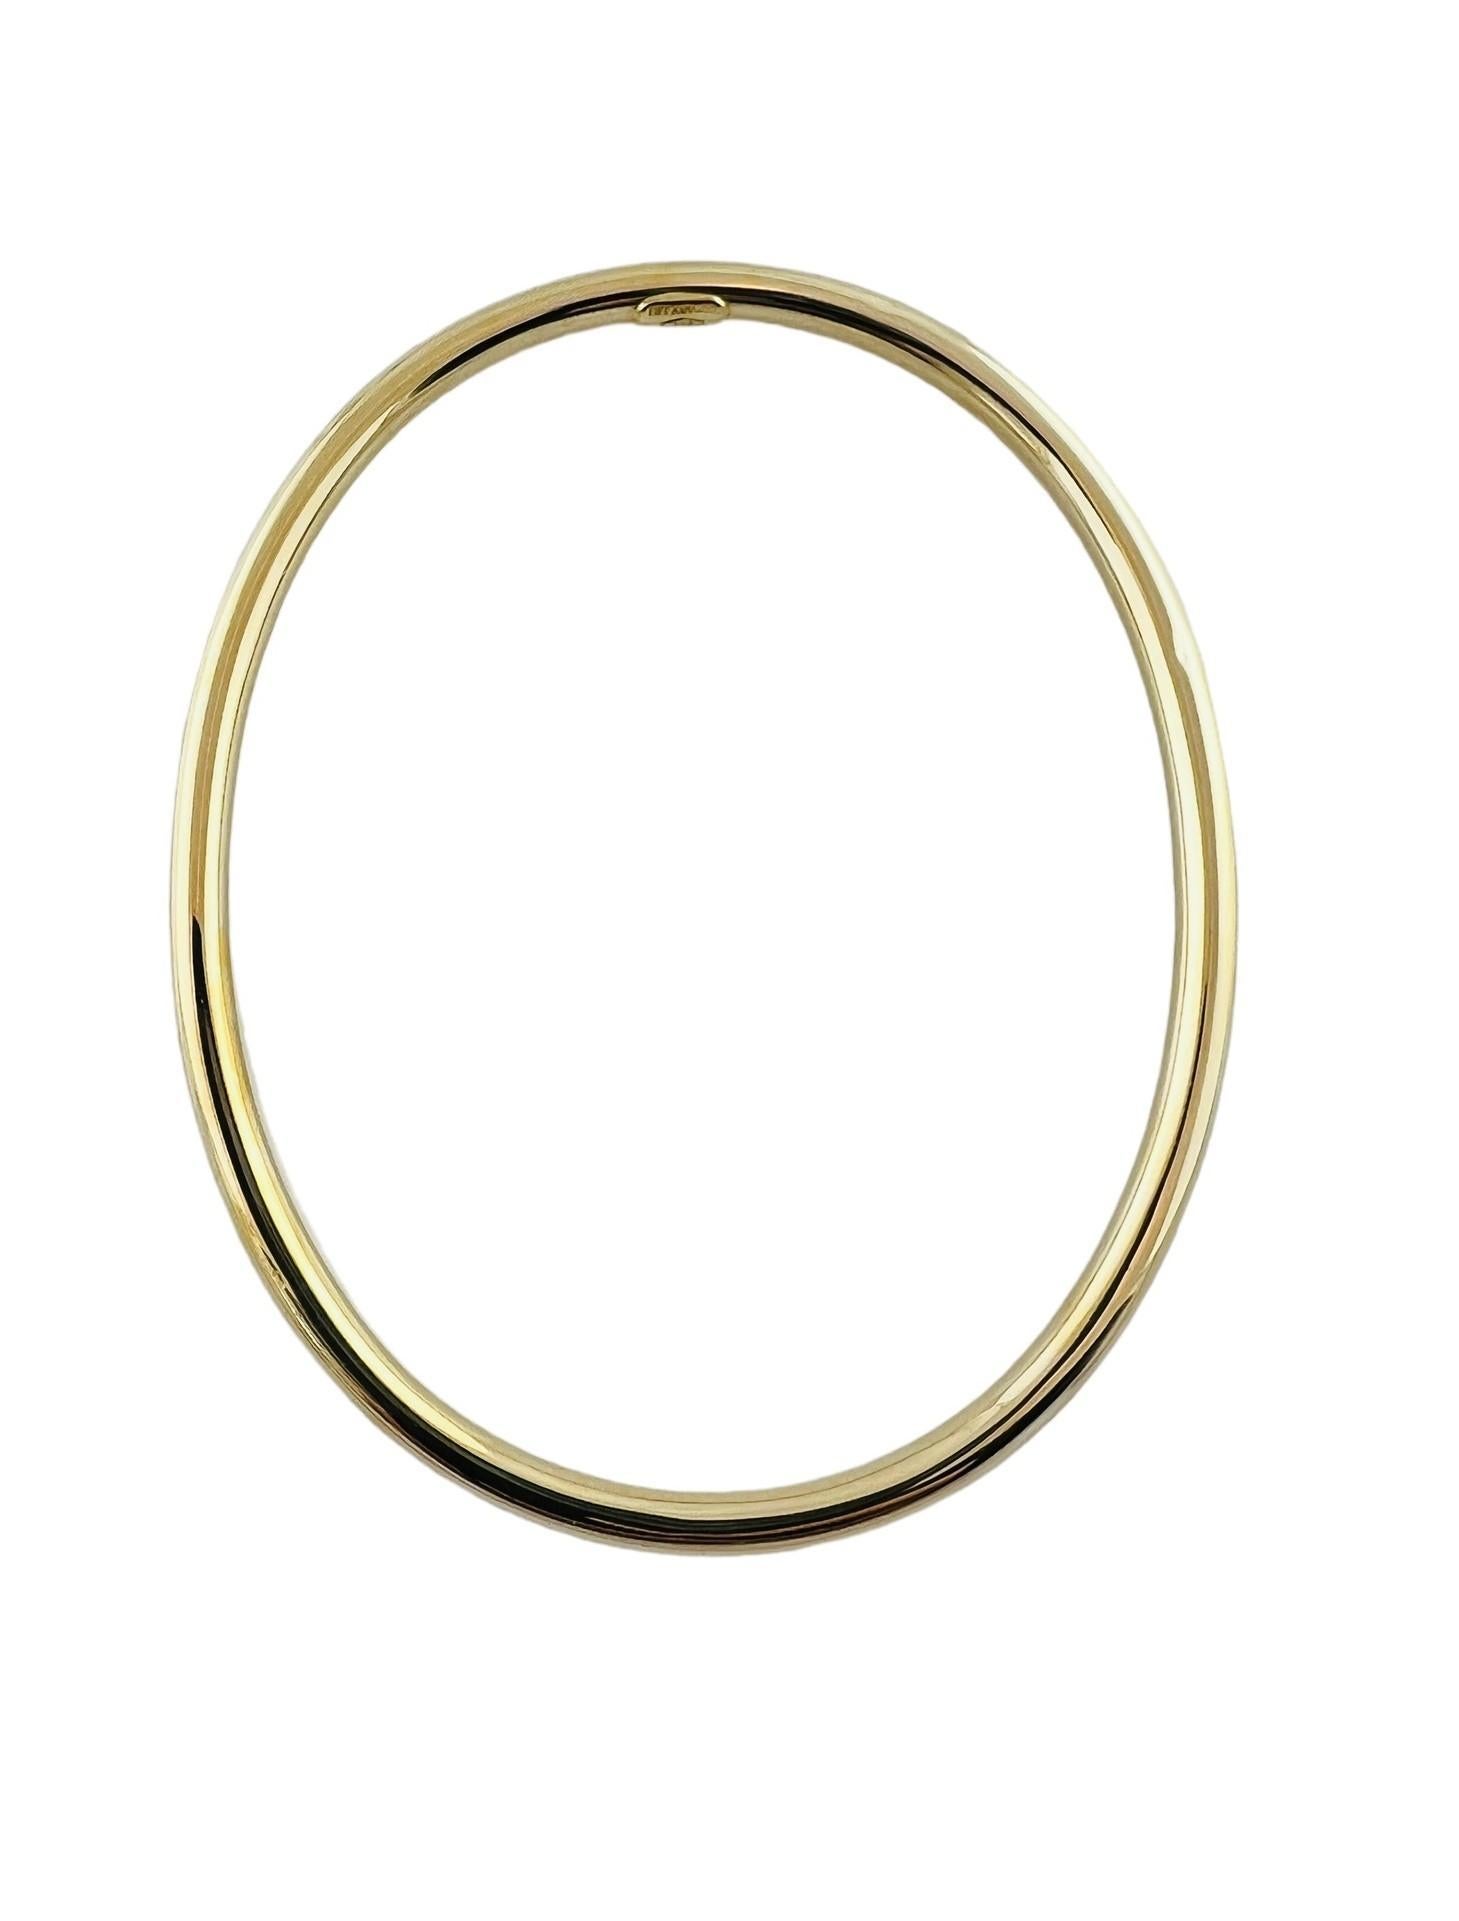 Tiffany & Co. 18K Yellow Gold Oval Bangle Bracelet #16746 1